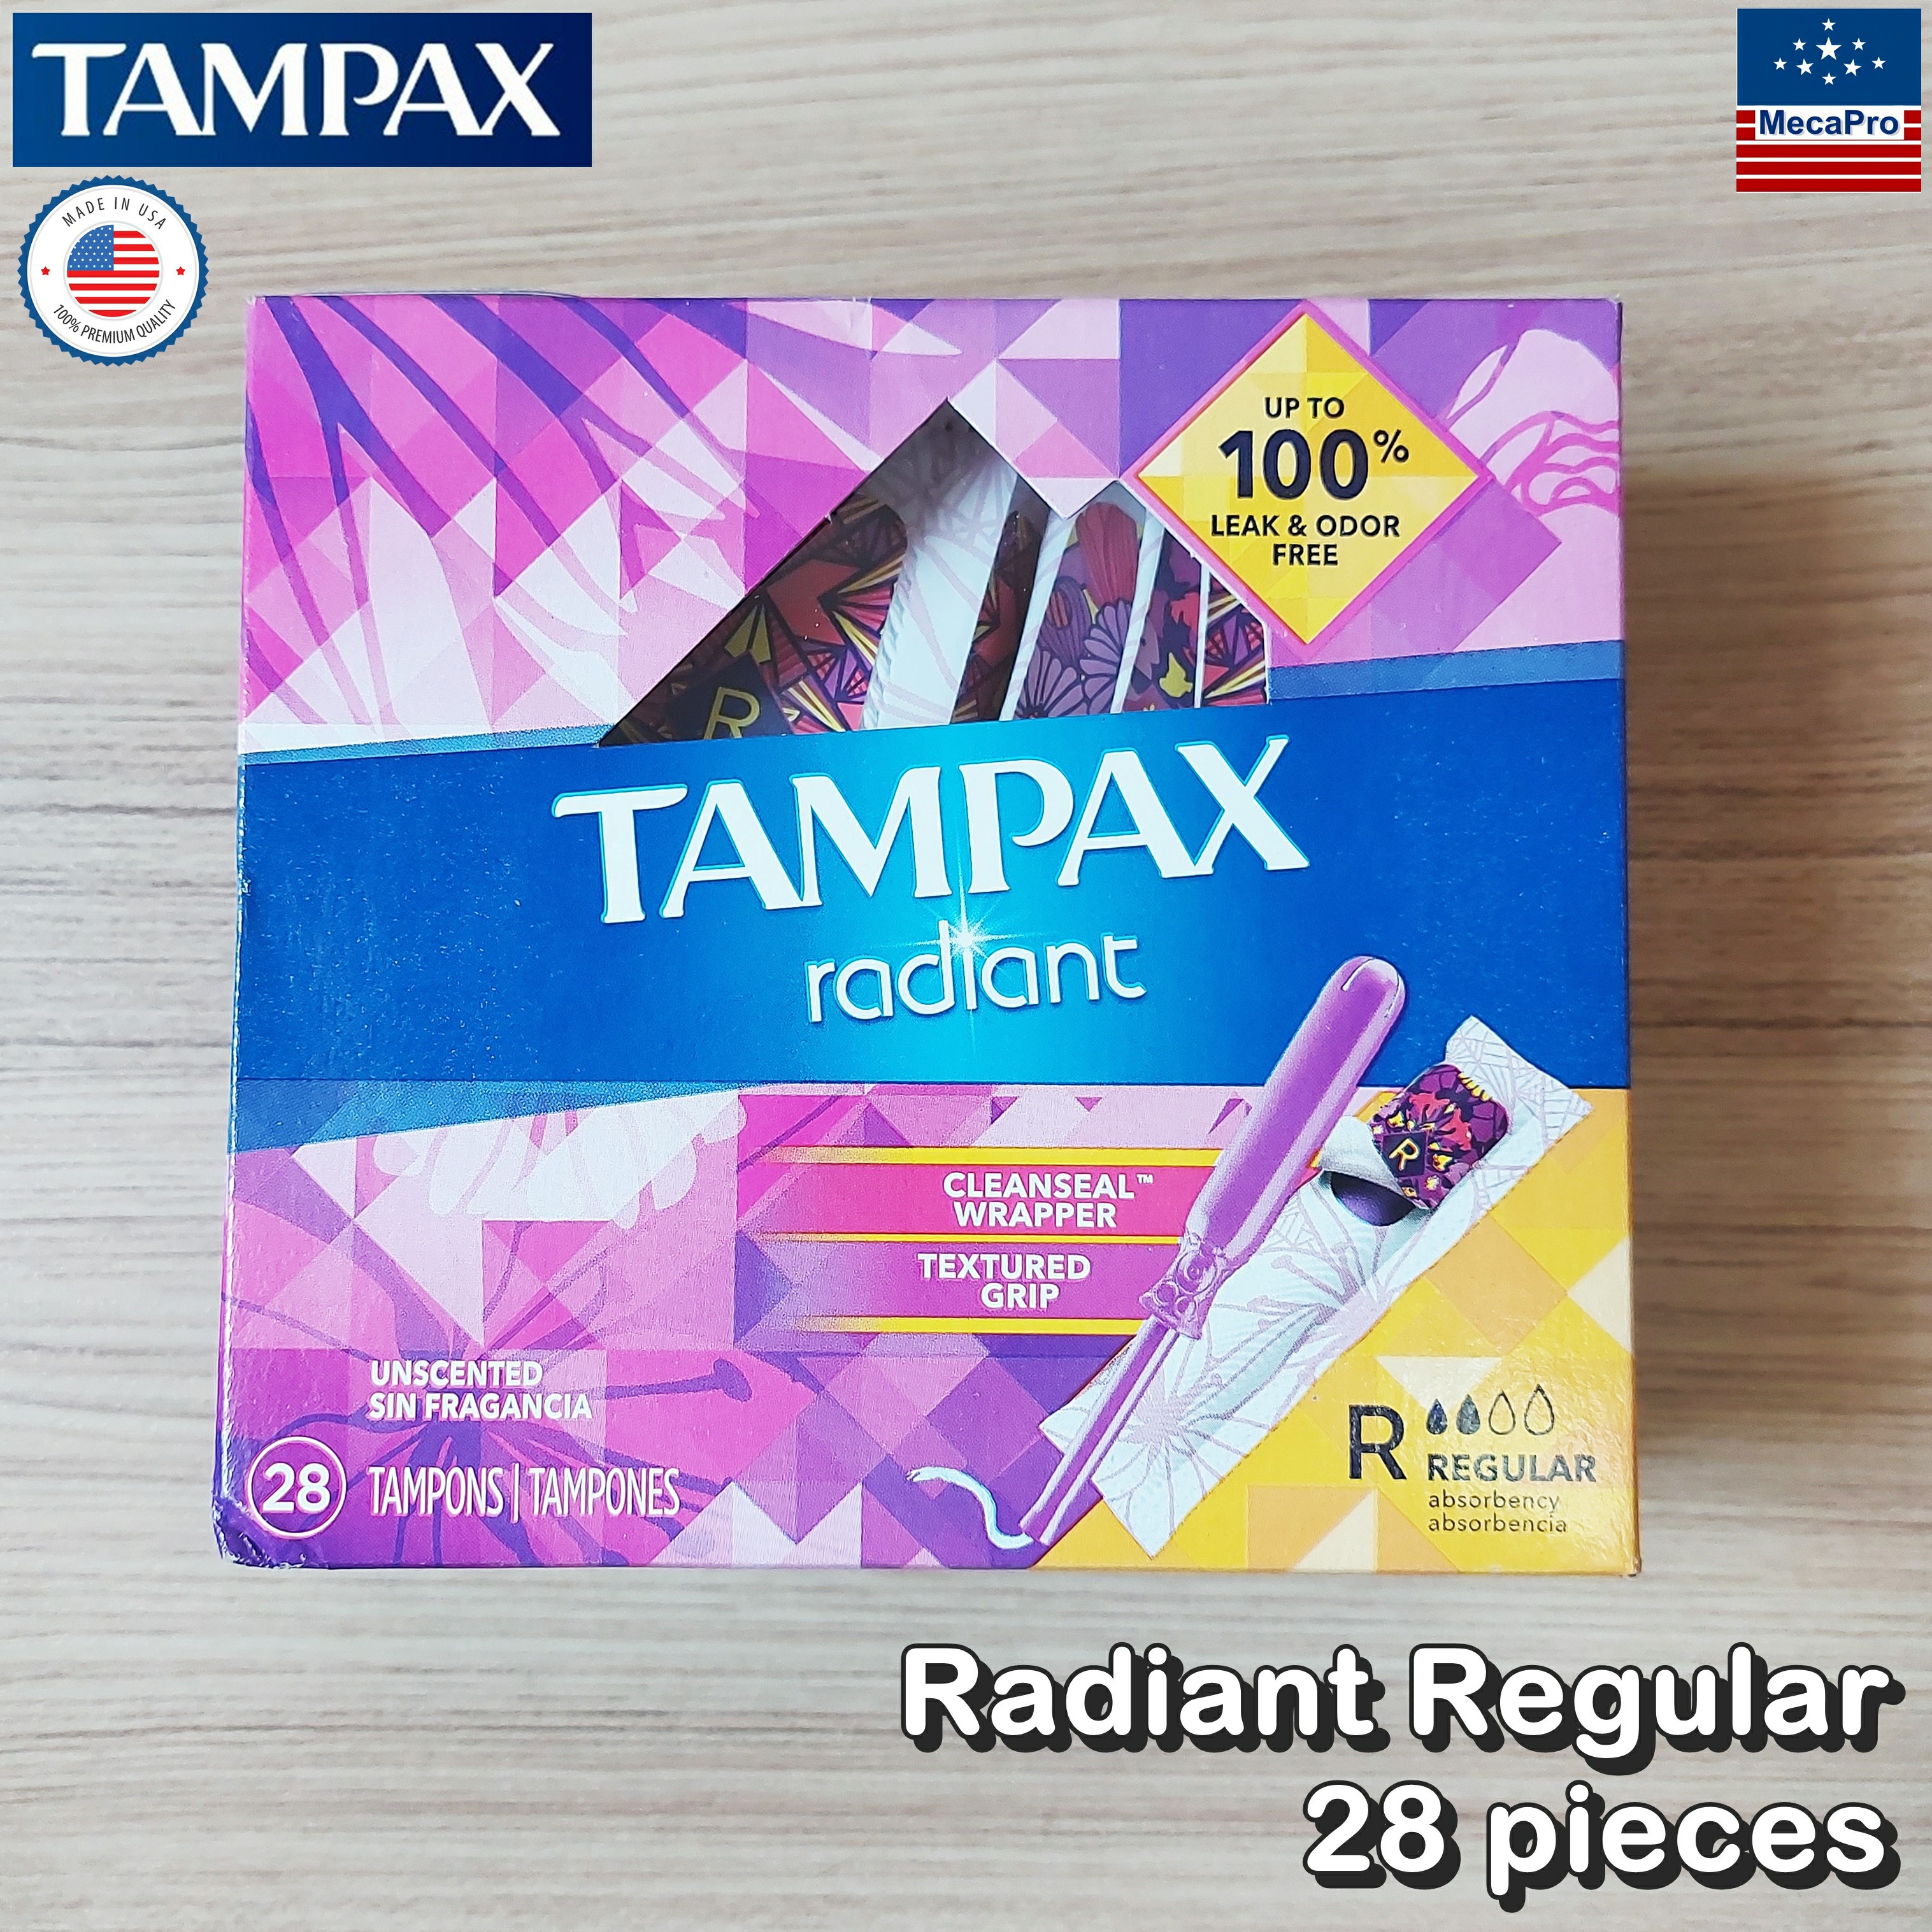 Tampax® Radiant Regular Absorbency Tampons Unscented 28 pieces ผ้าอนามัยแบบสอด 28 ชิ้น เหมาะกับวันมาปกติ ไร้กลิ่น